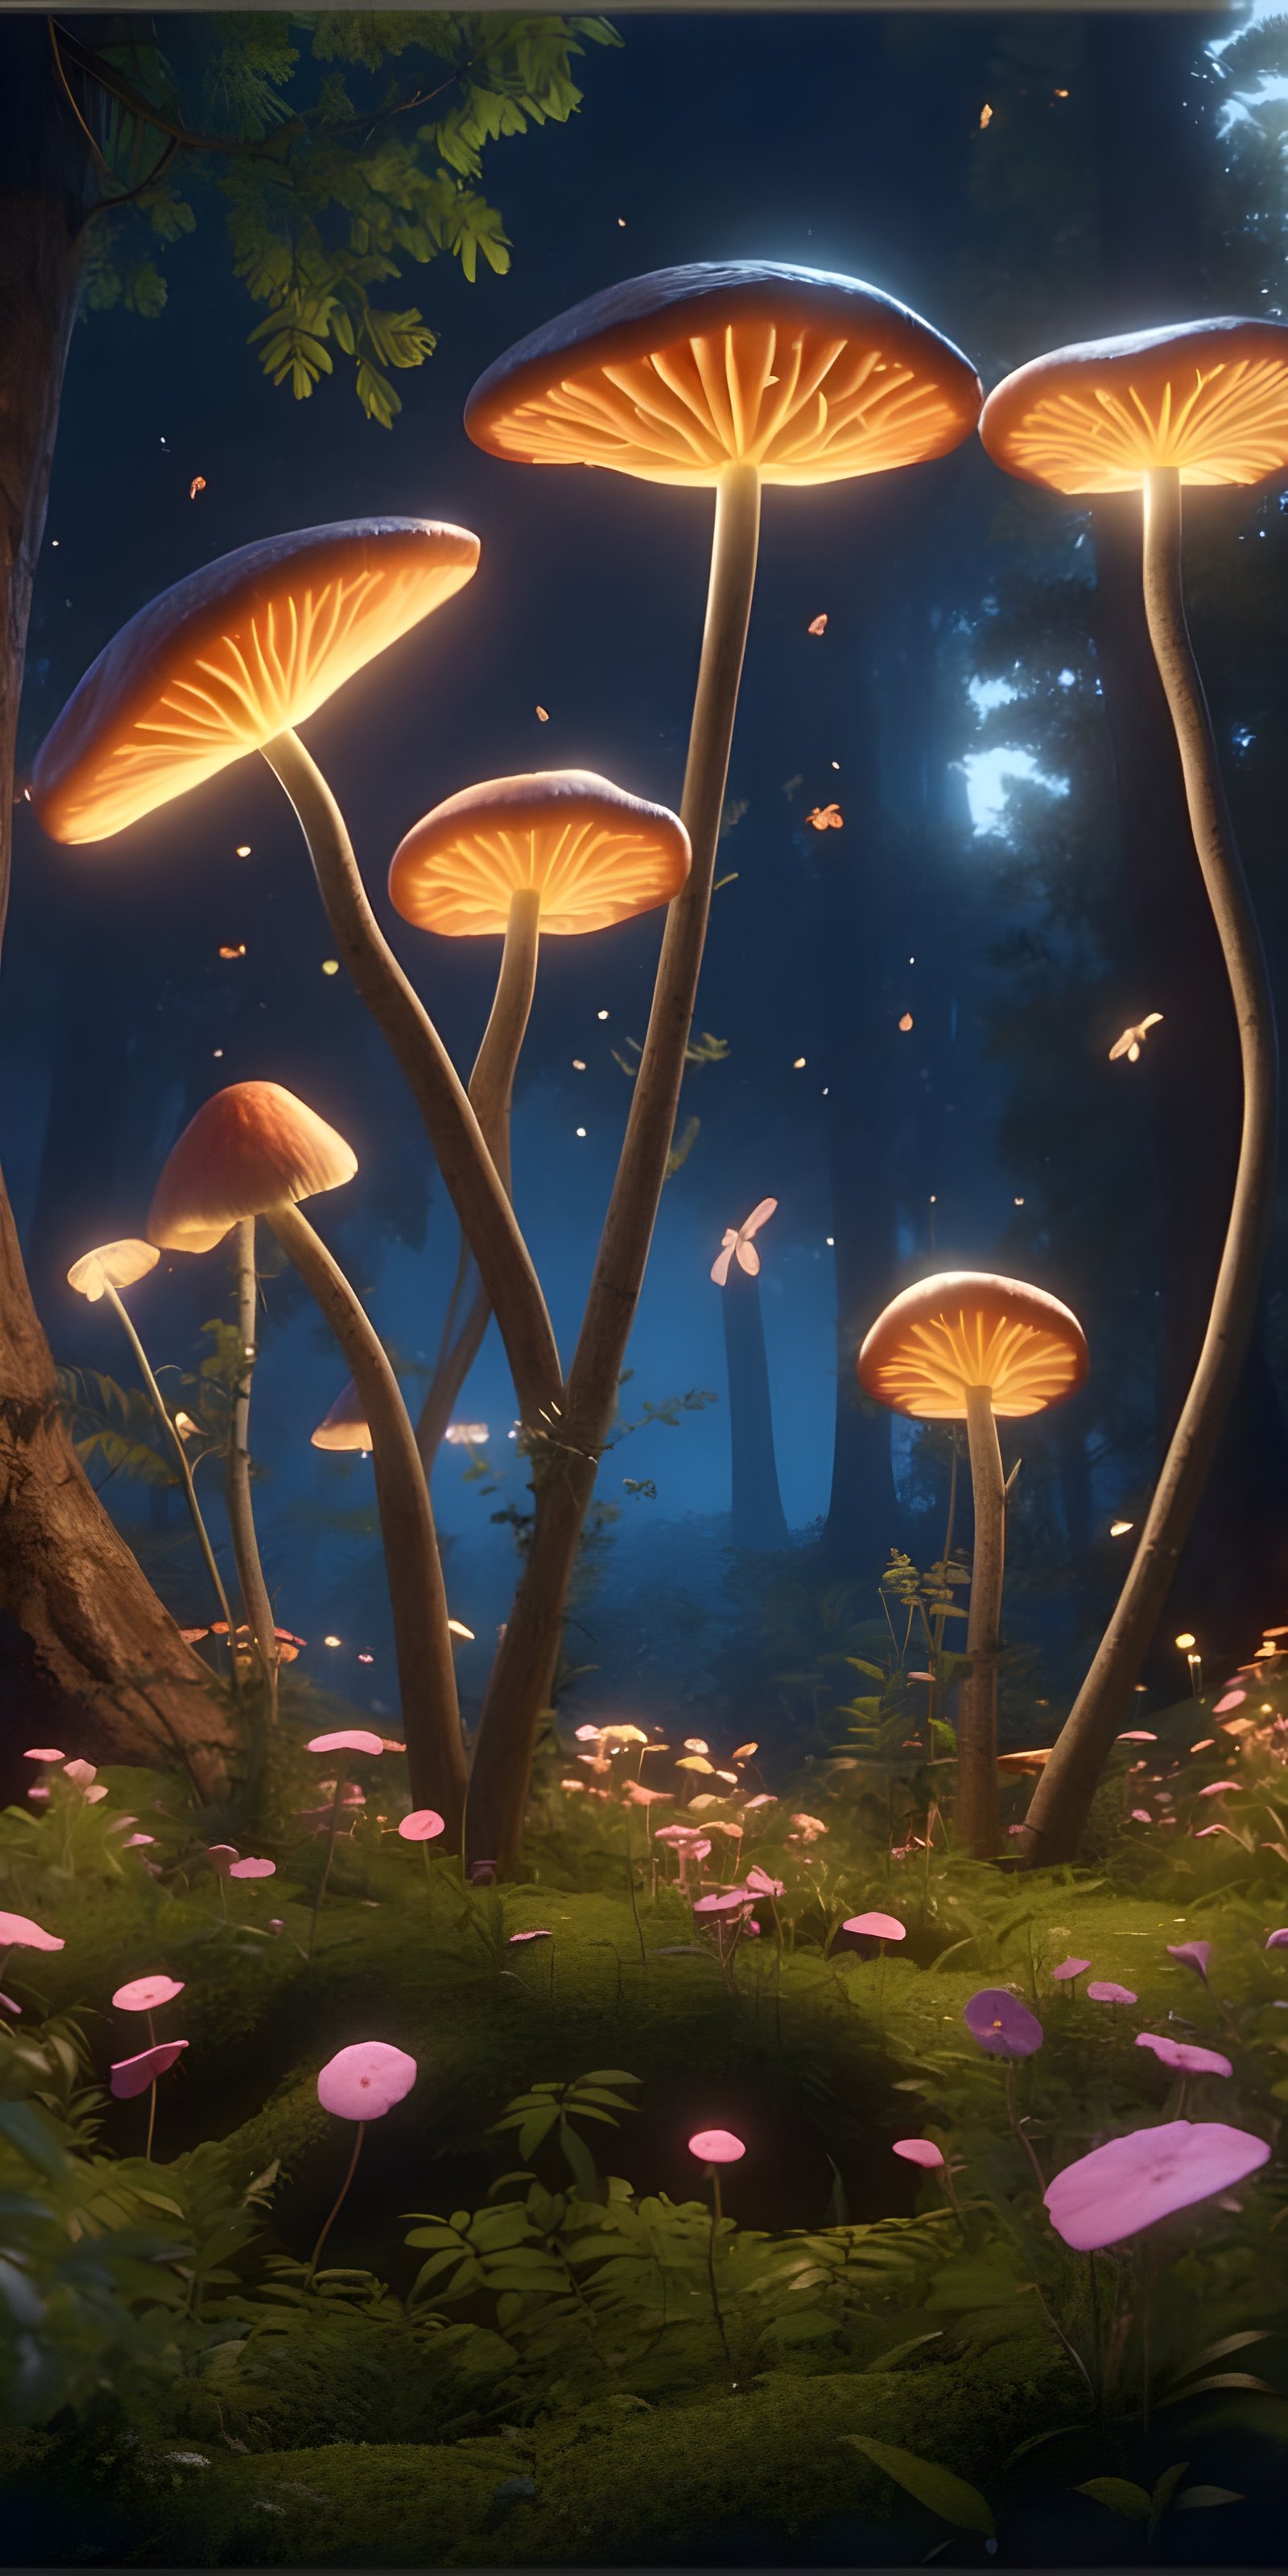 Cool Mushroom Wallpaper For Phone